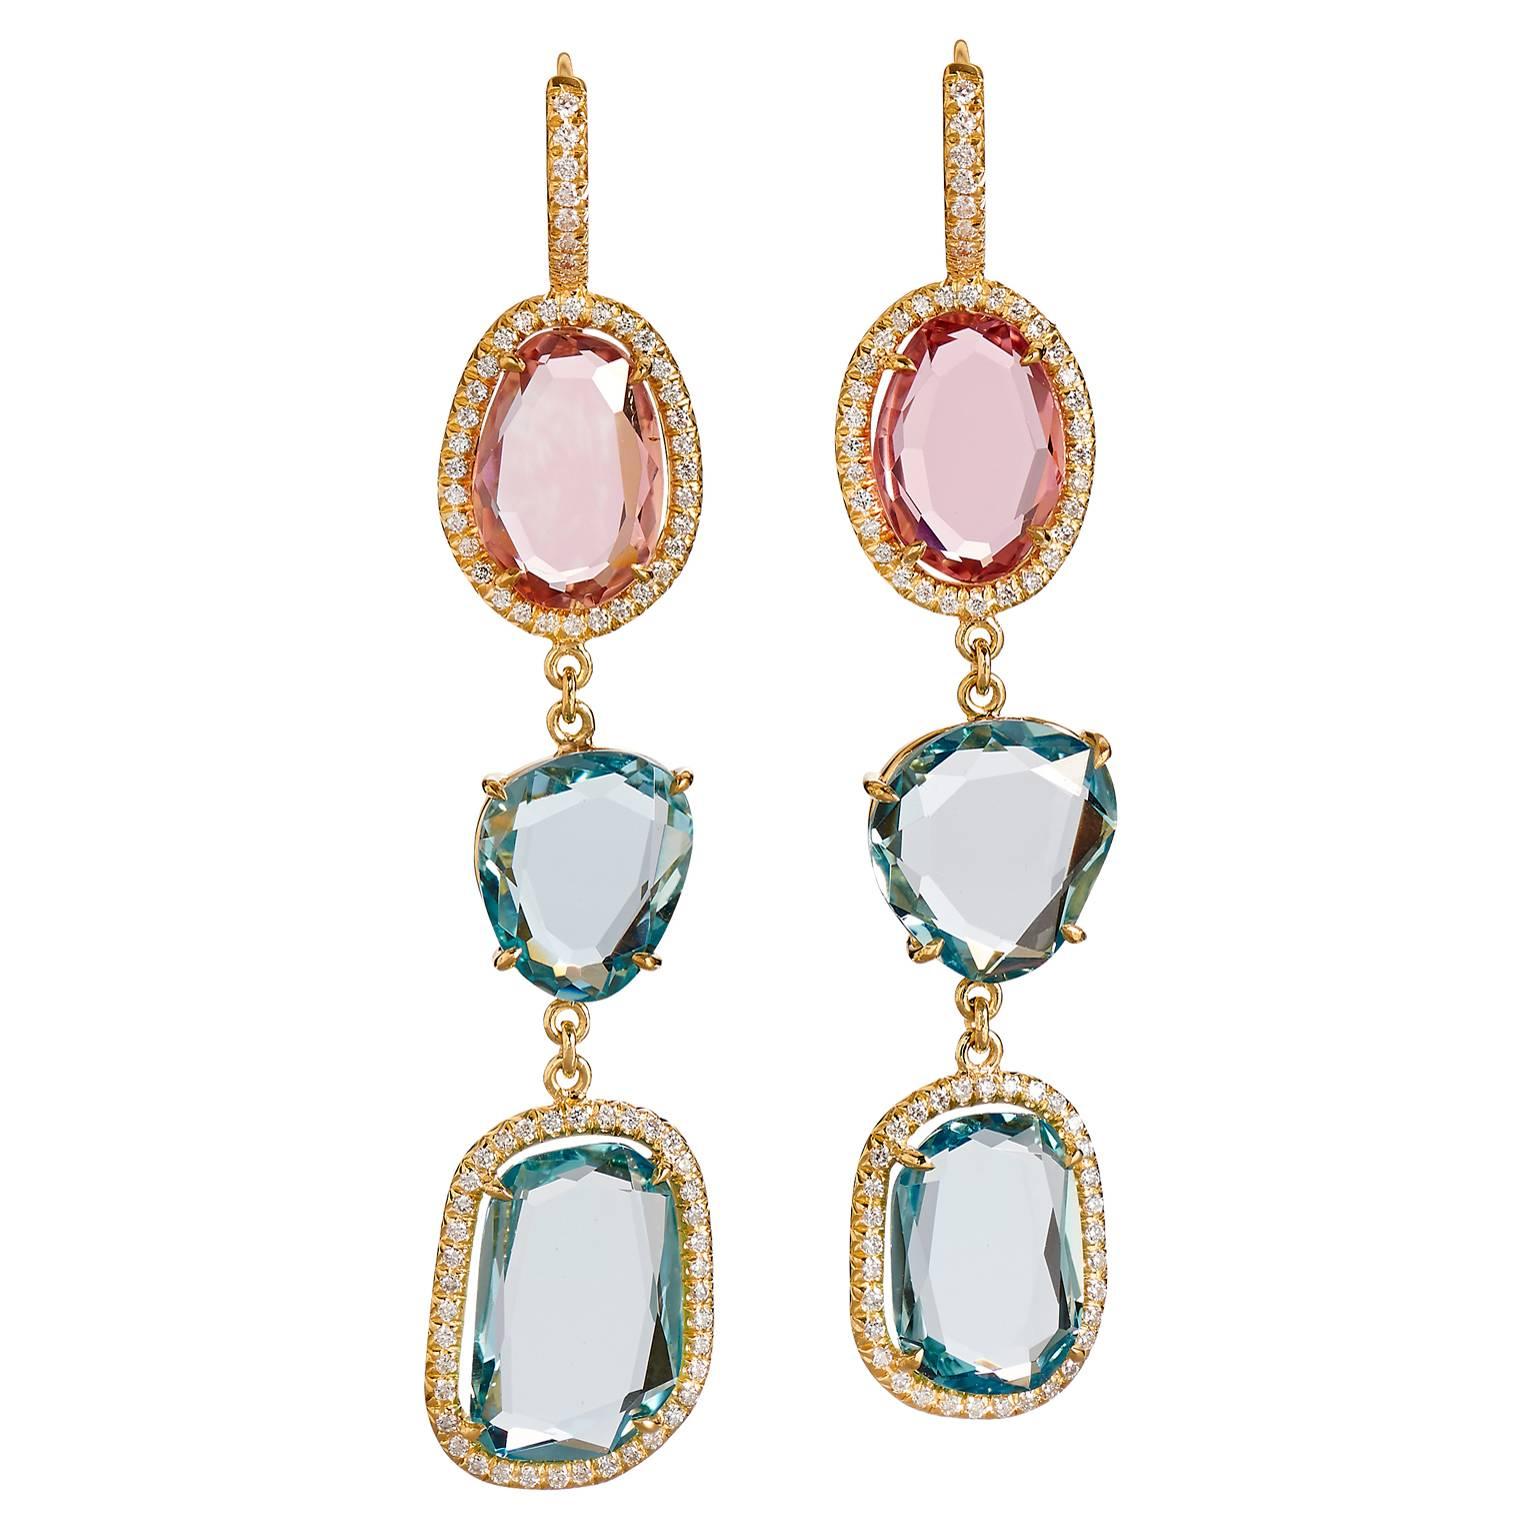 17.02 Carat Aquamarine Pink Tourmaline Slices Diamond Gold Drop Earrings